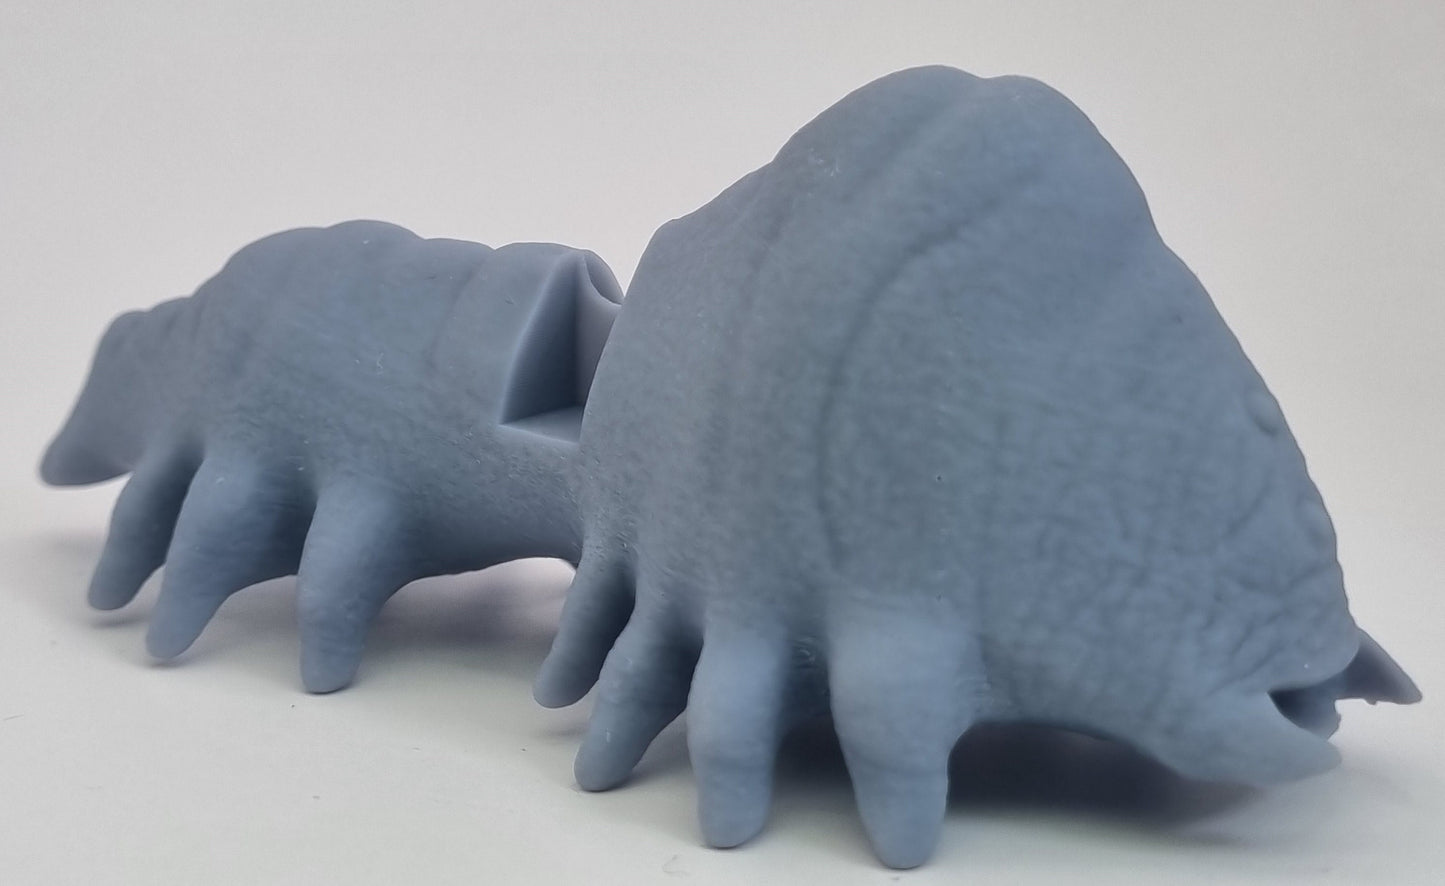 Building toy custom 3D printed galaxy wars alien slug!